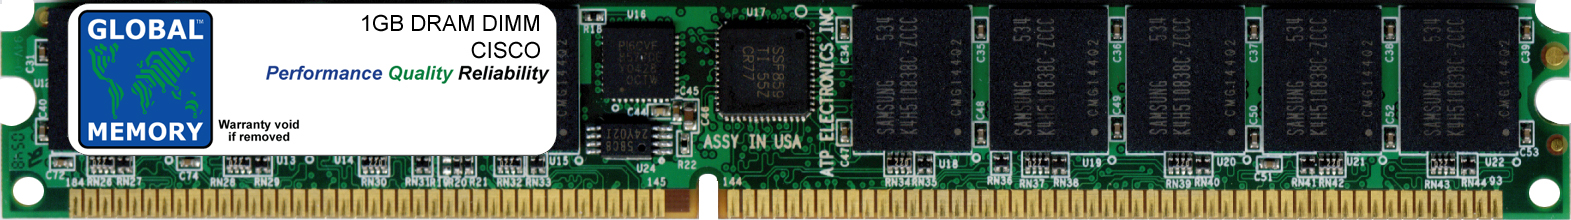 1GB DRAM DIMM MEMORY RAM FOR CISCO 3925 / 3945 ROUTERS (MEM-3900-1GB)